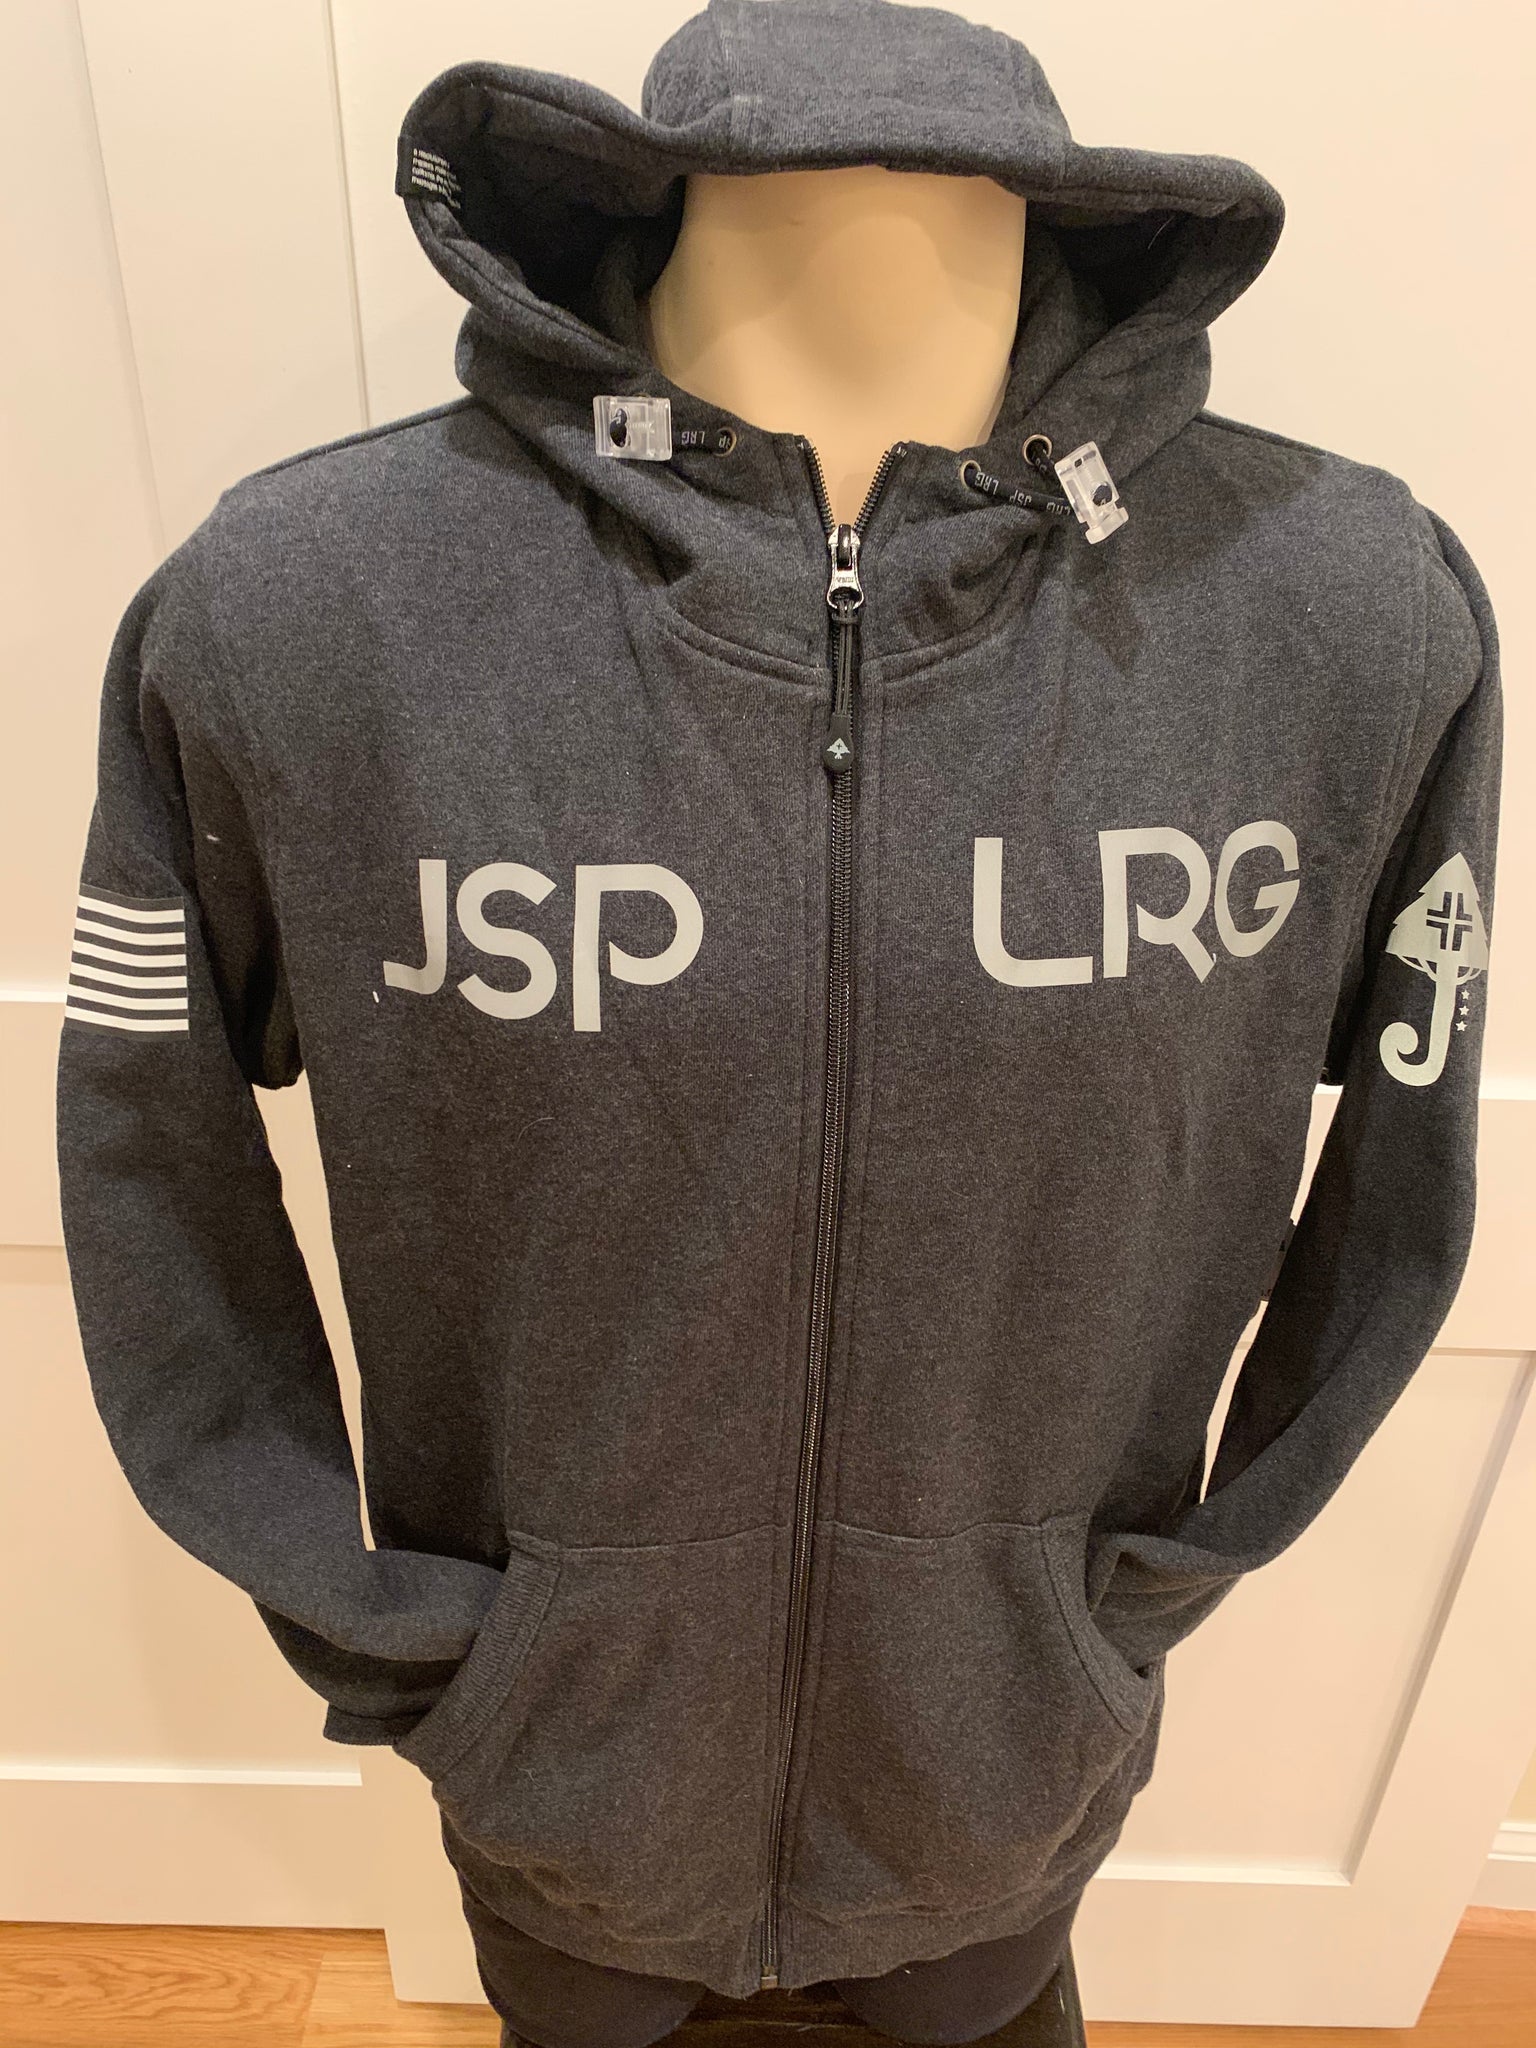 LRG "JSP-LRG" Sweatshirt Hoodie - Large